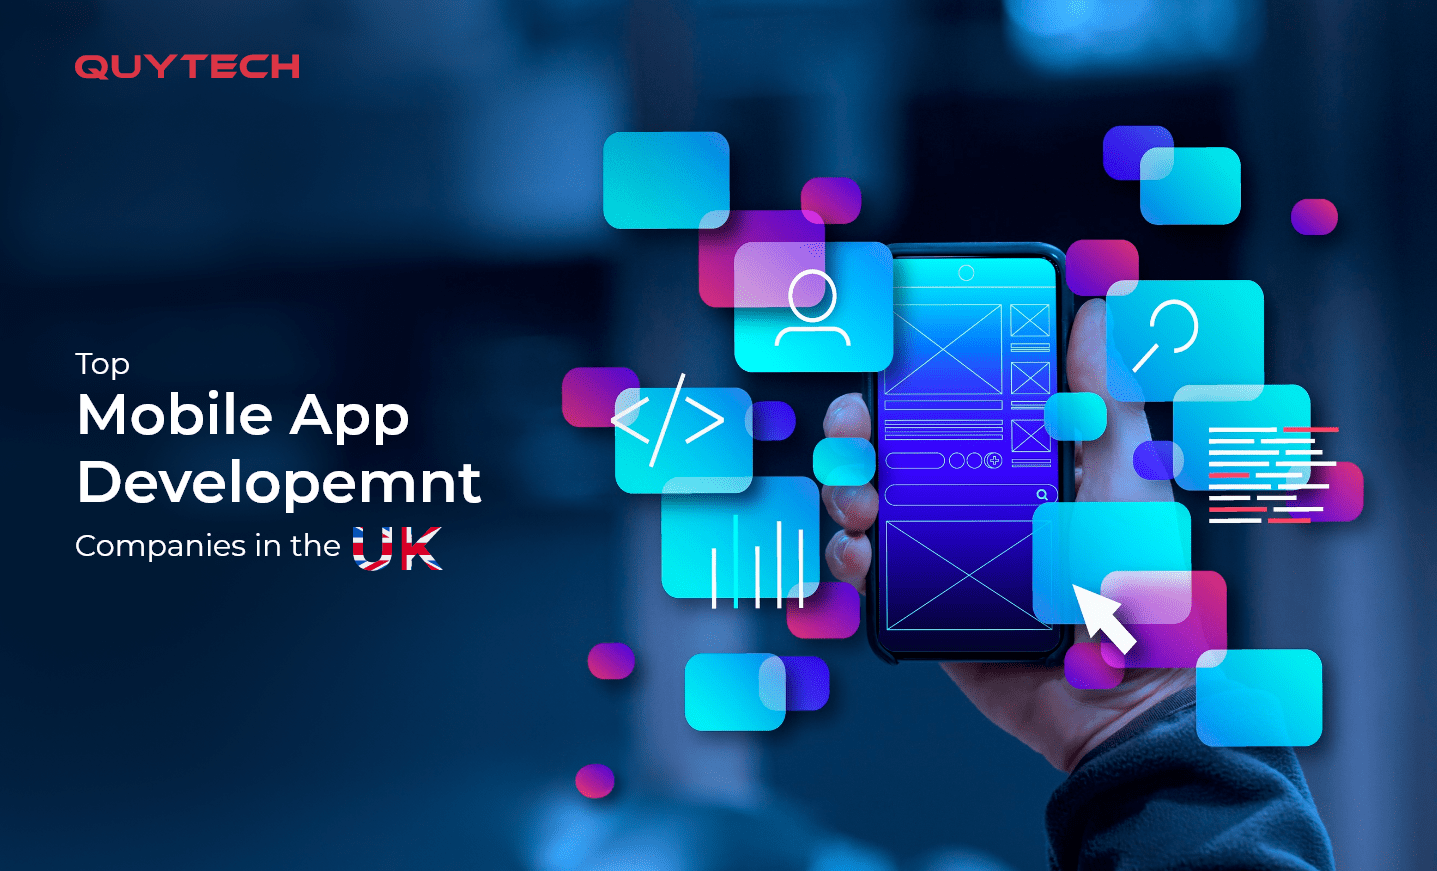 Top Mobile App Development Companies in the UK